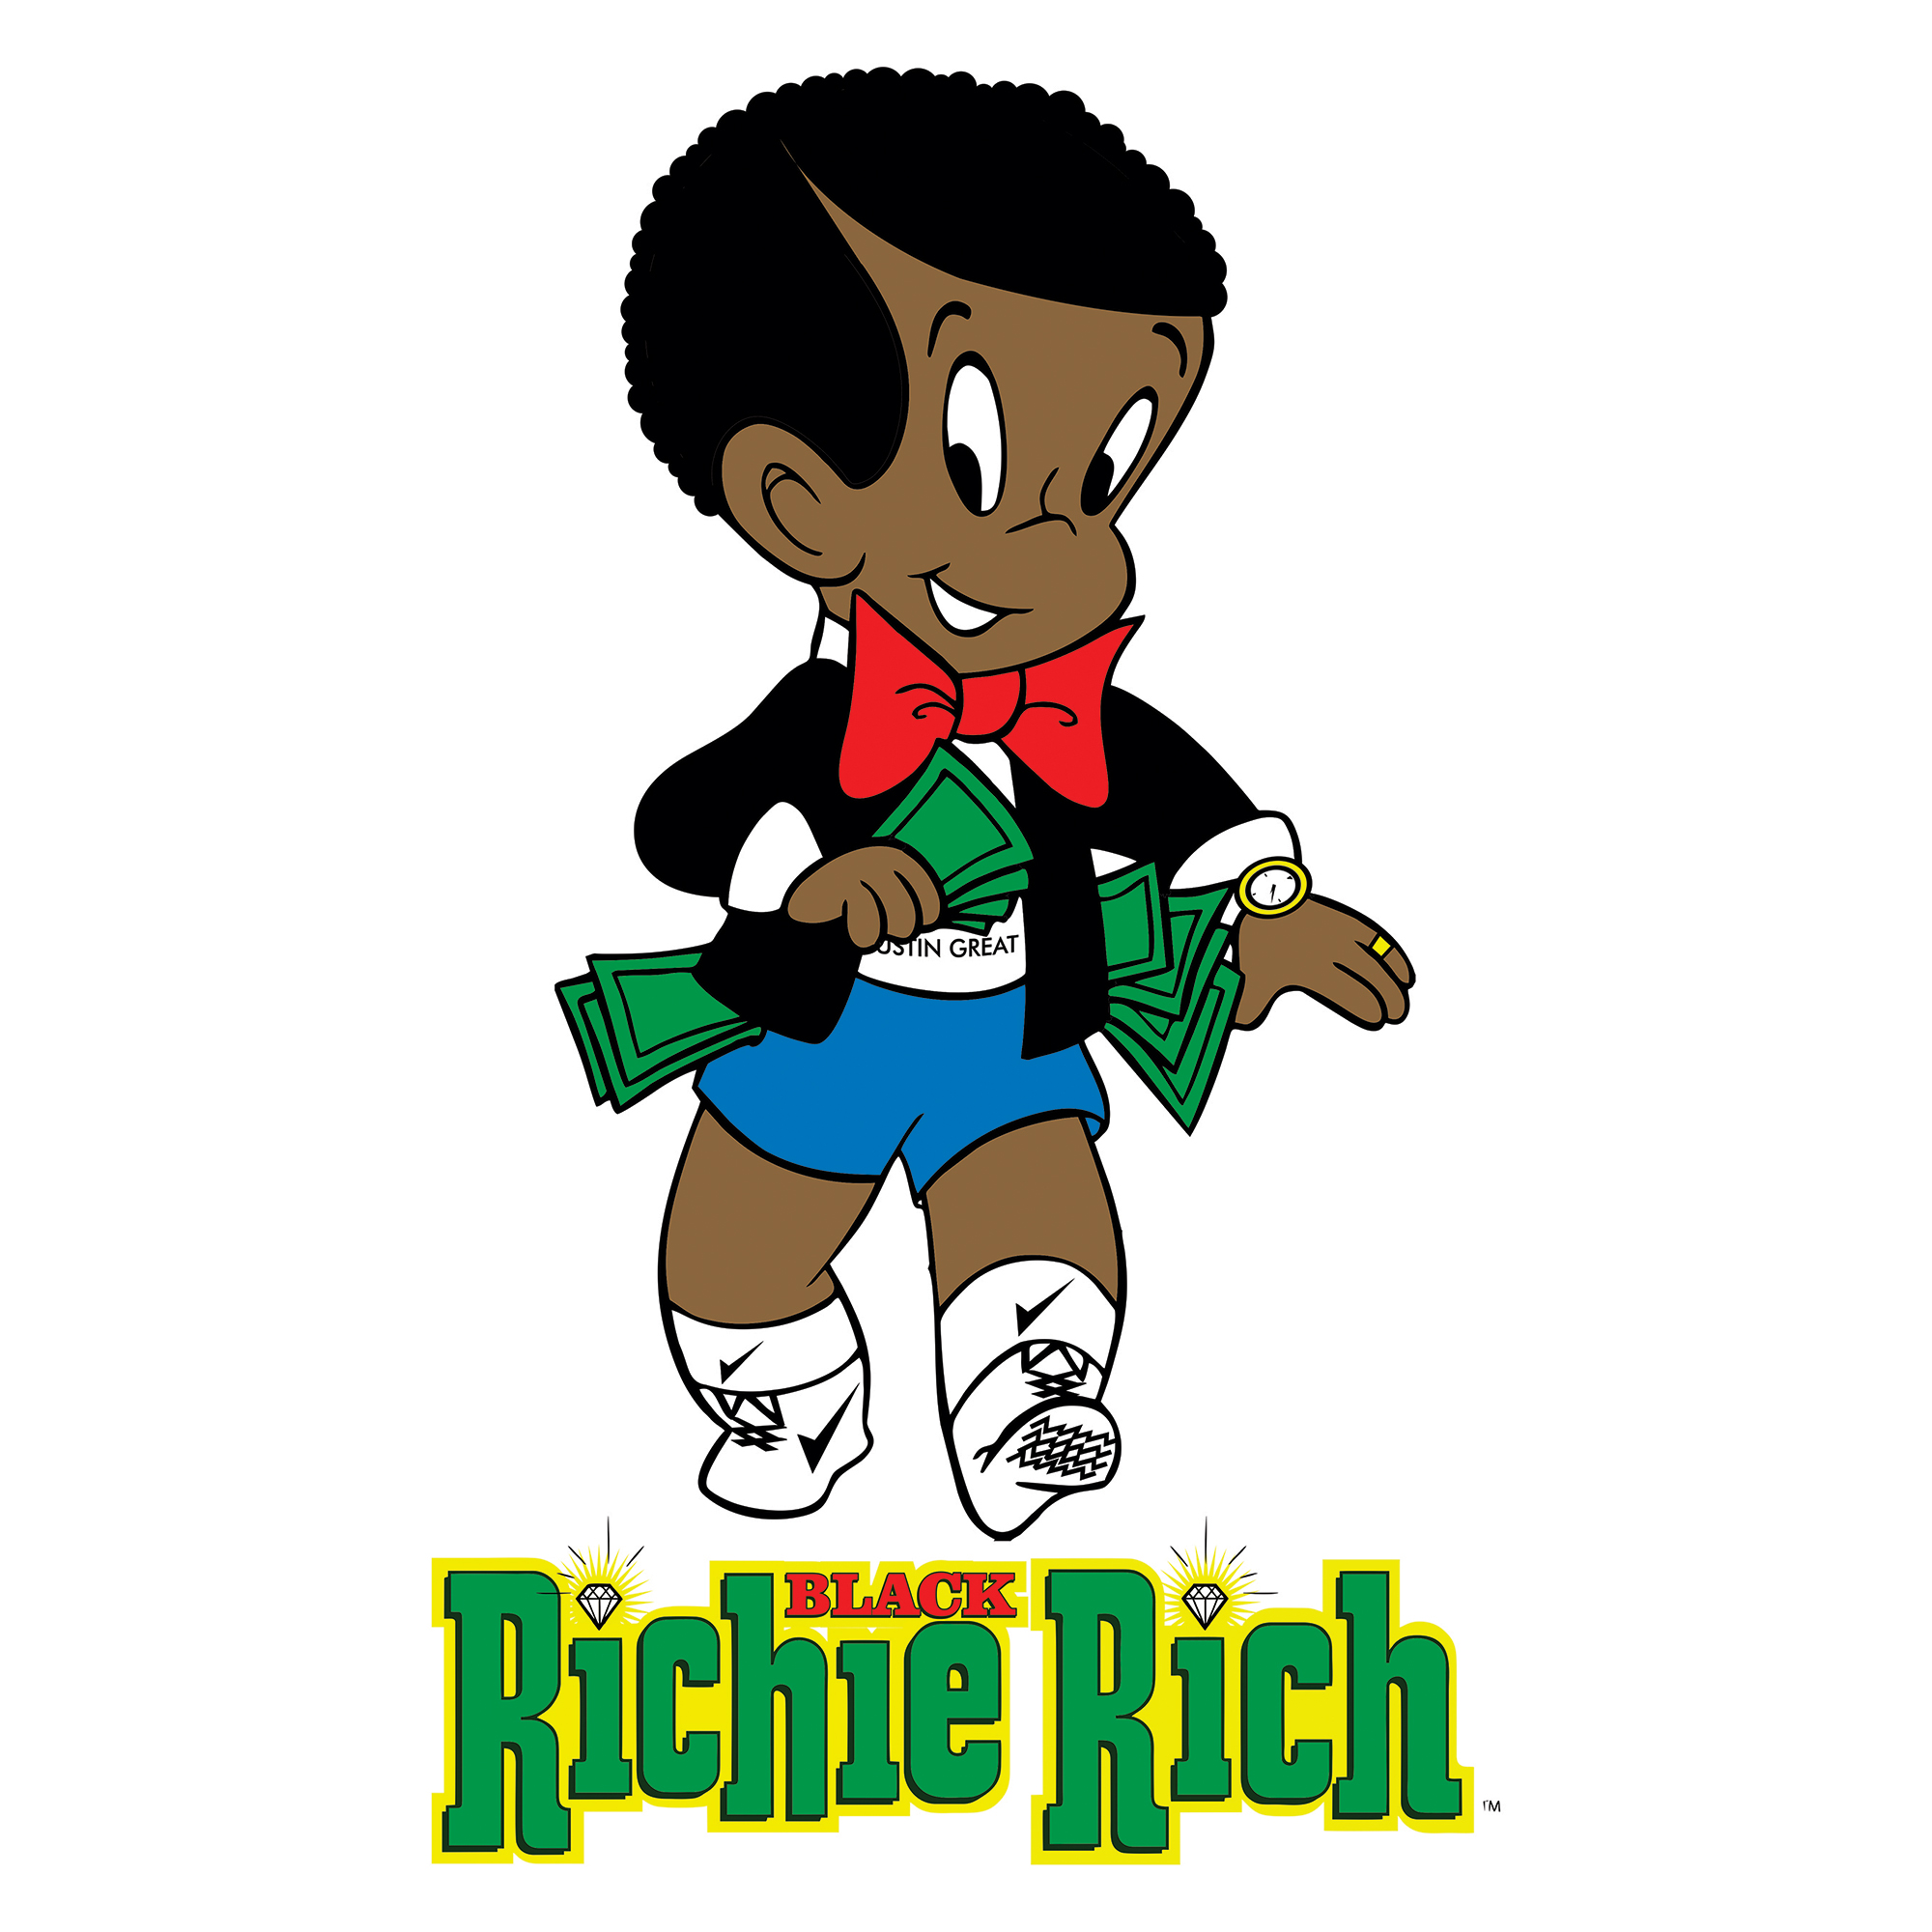 Black richie rich